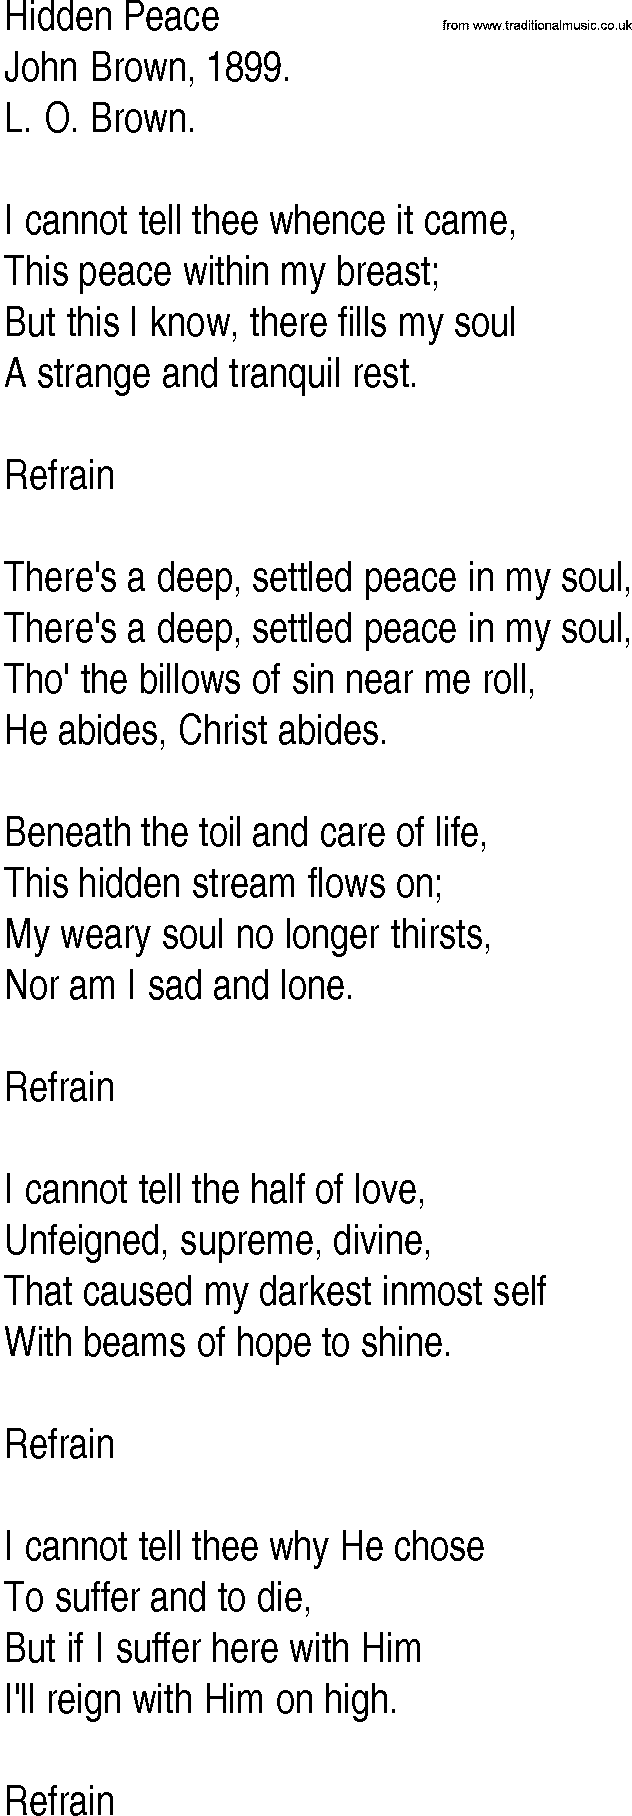 Hymn and Gospel Song: Hidden Peace by John Brown lyrics